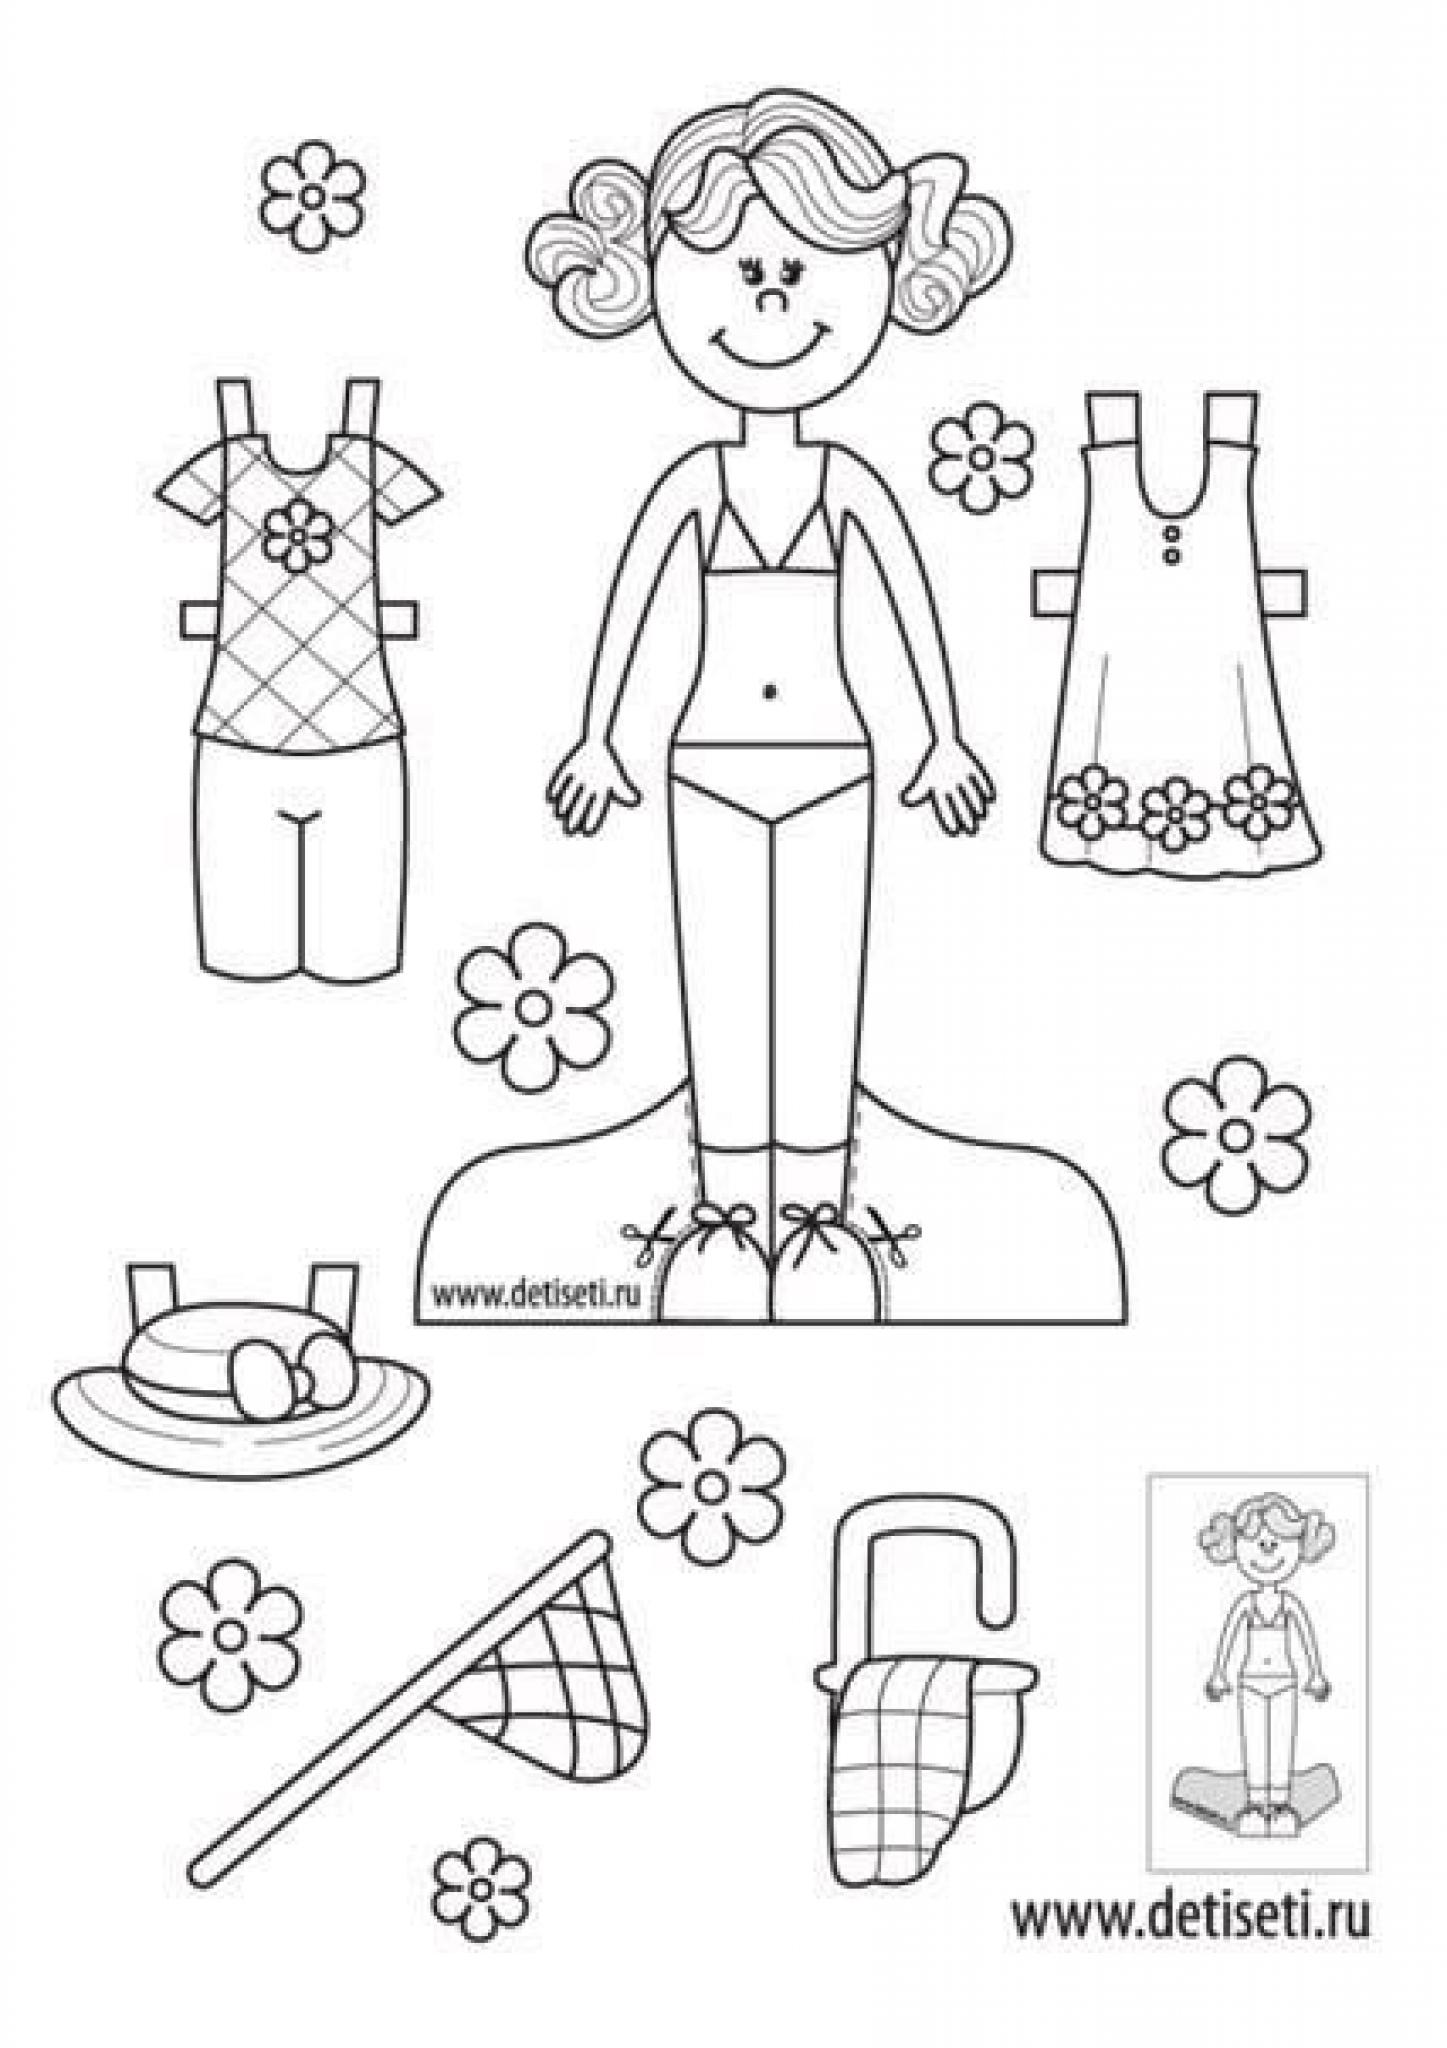 Шаблон куклы для вырезания из бумаги распечатать. Бумажная кукла раскраска. Раскраски одевалки. Раскраска кукла с одеждой. Кукла для одевания.